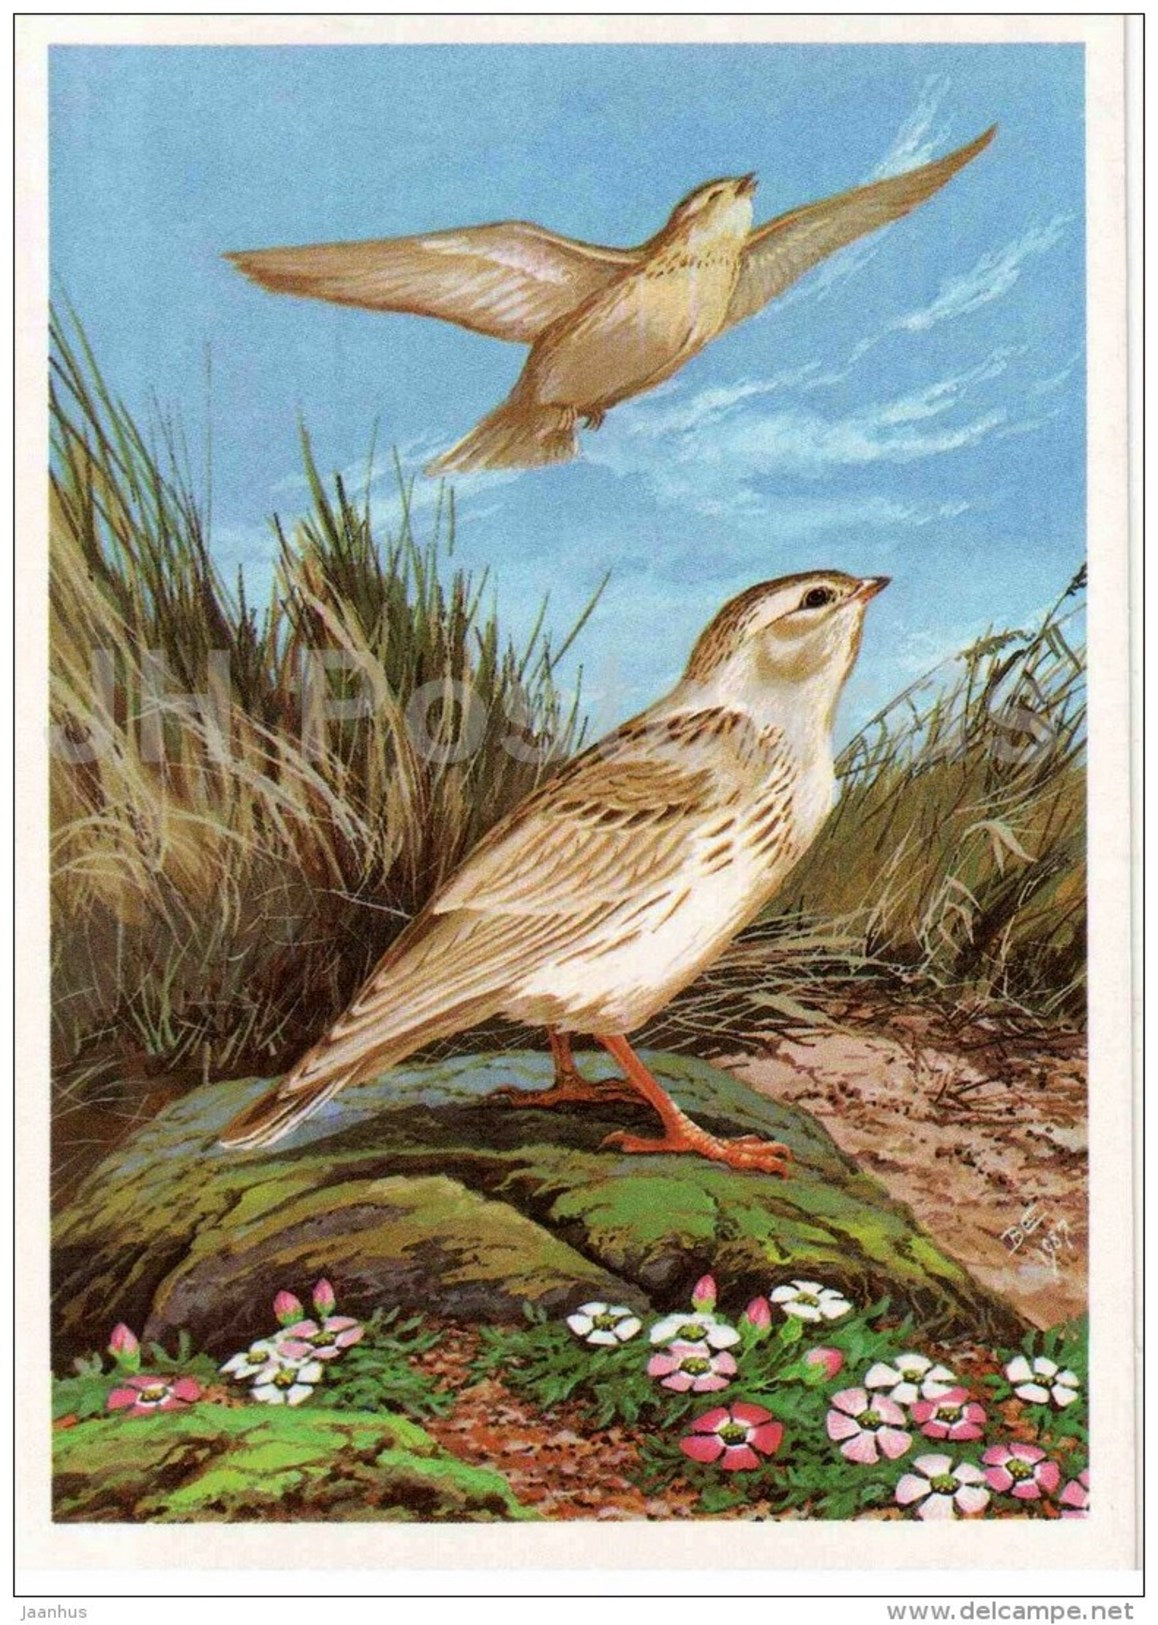 Asian short-toed lark - Calandrella cheleensis - bird - Birds of Russia - Siberia - 1988 - Russia USSR - unused - JH Postcards